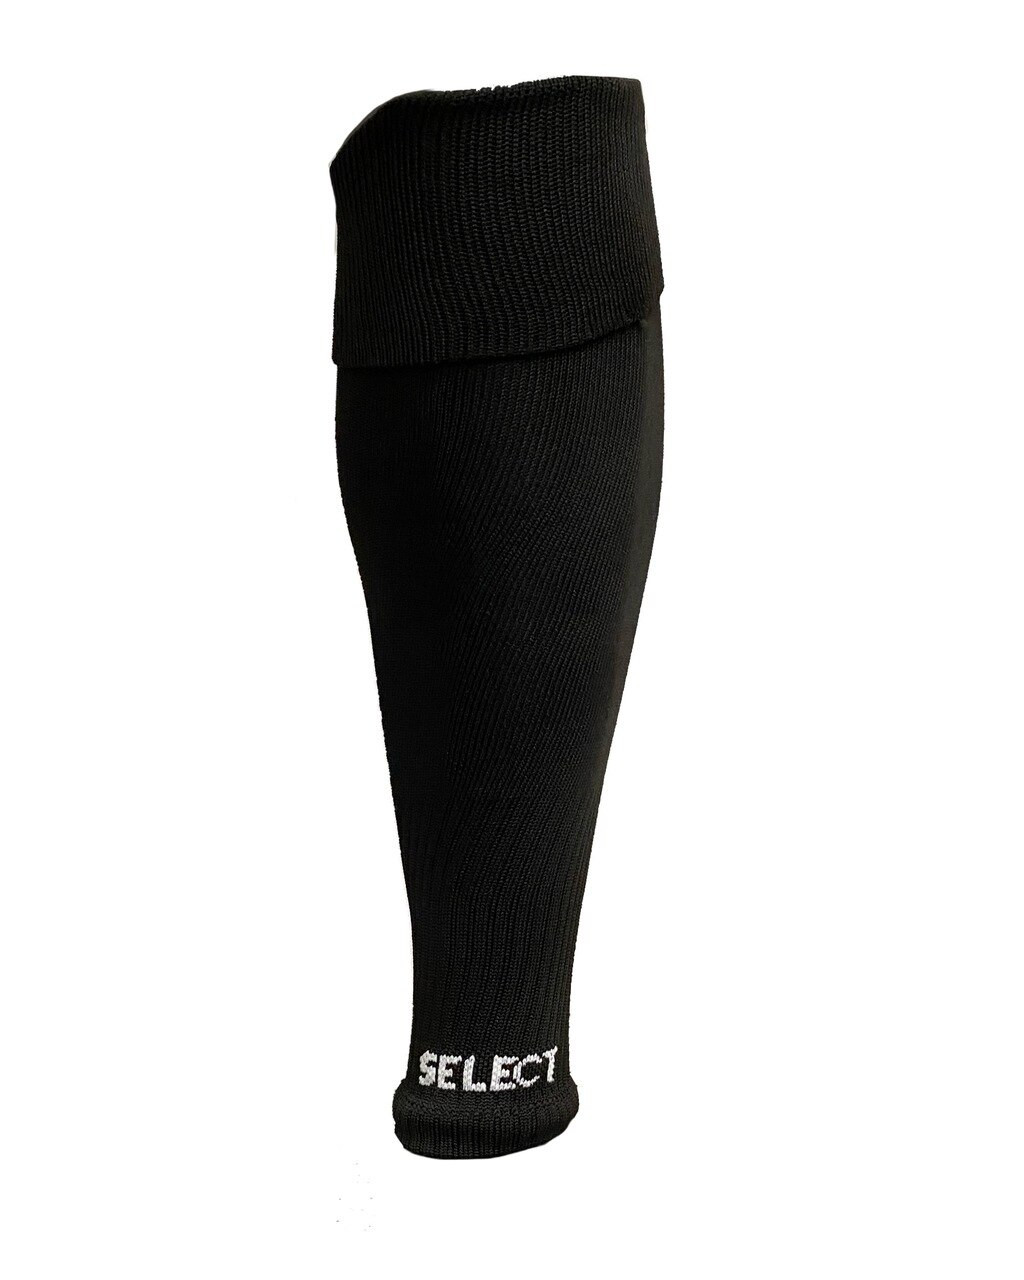 FOOTLESS SOCKS - BLACK - Select Football (Evolution Sports Imports Pty Ltd)